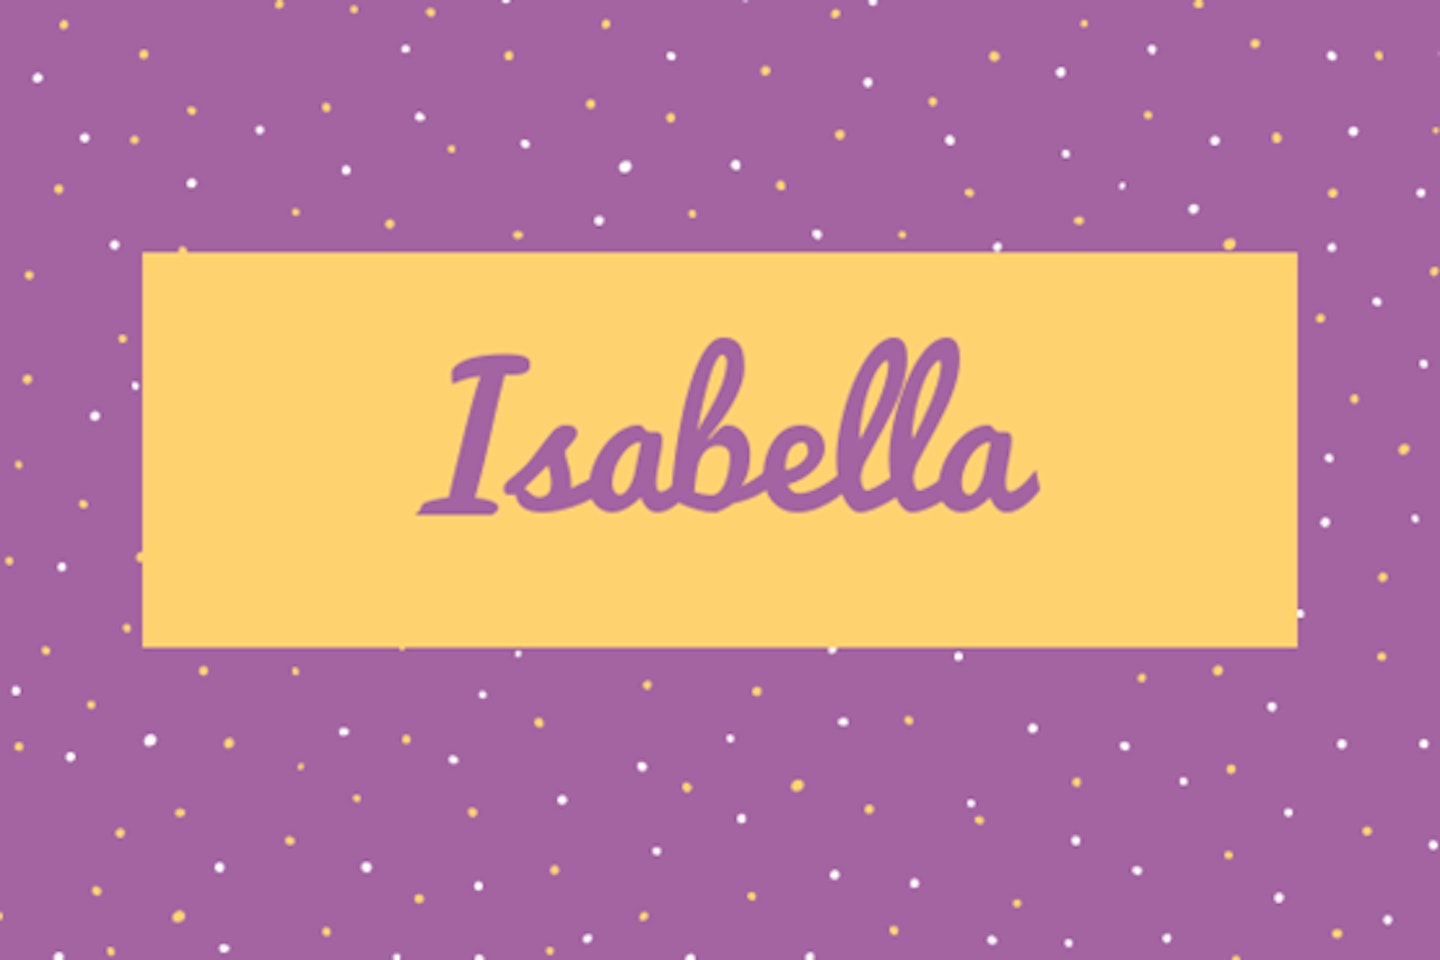 43) Isabella